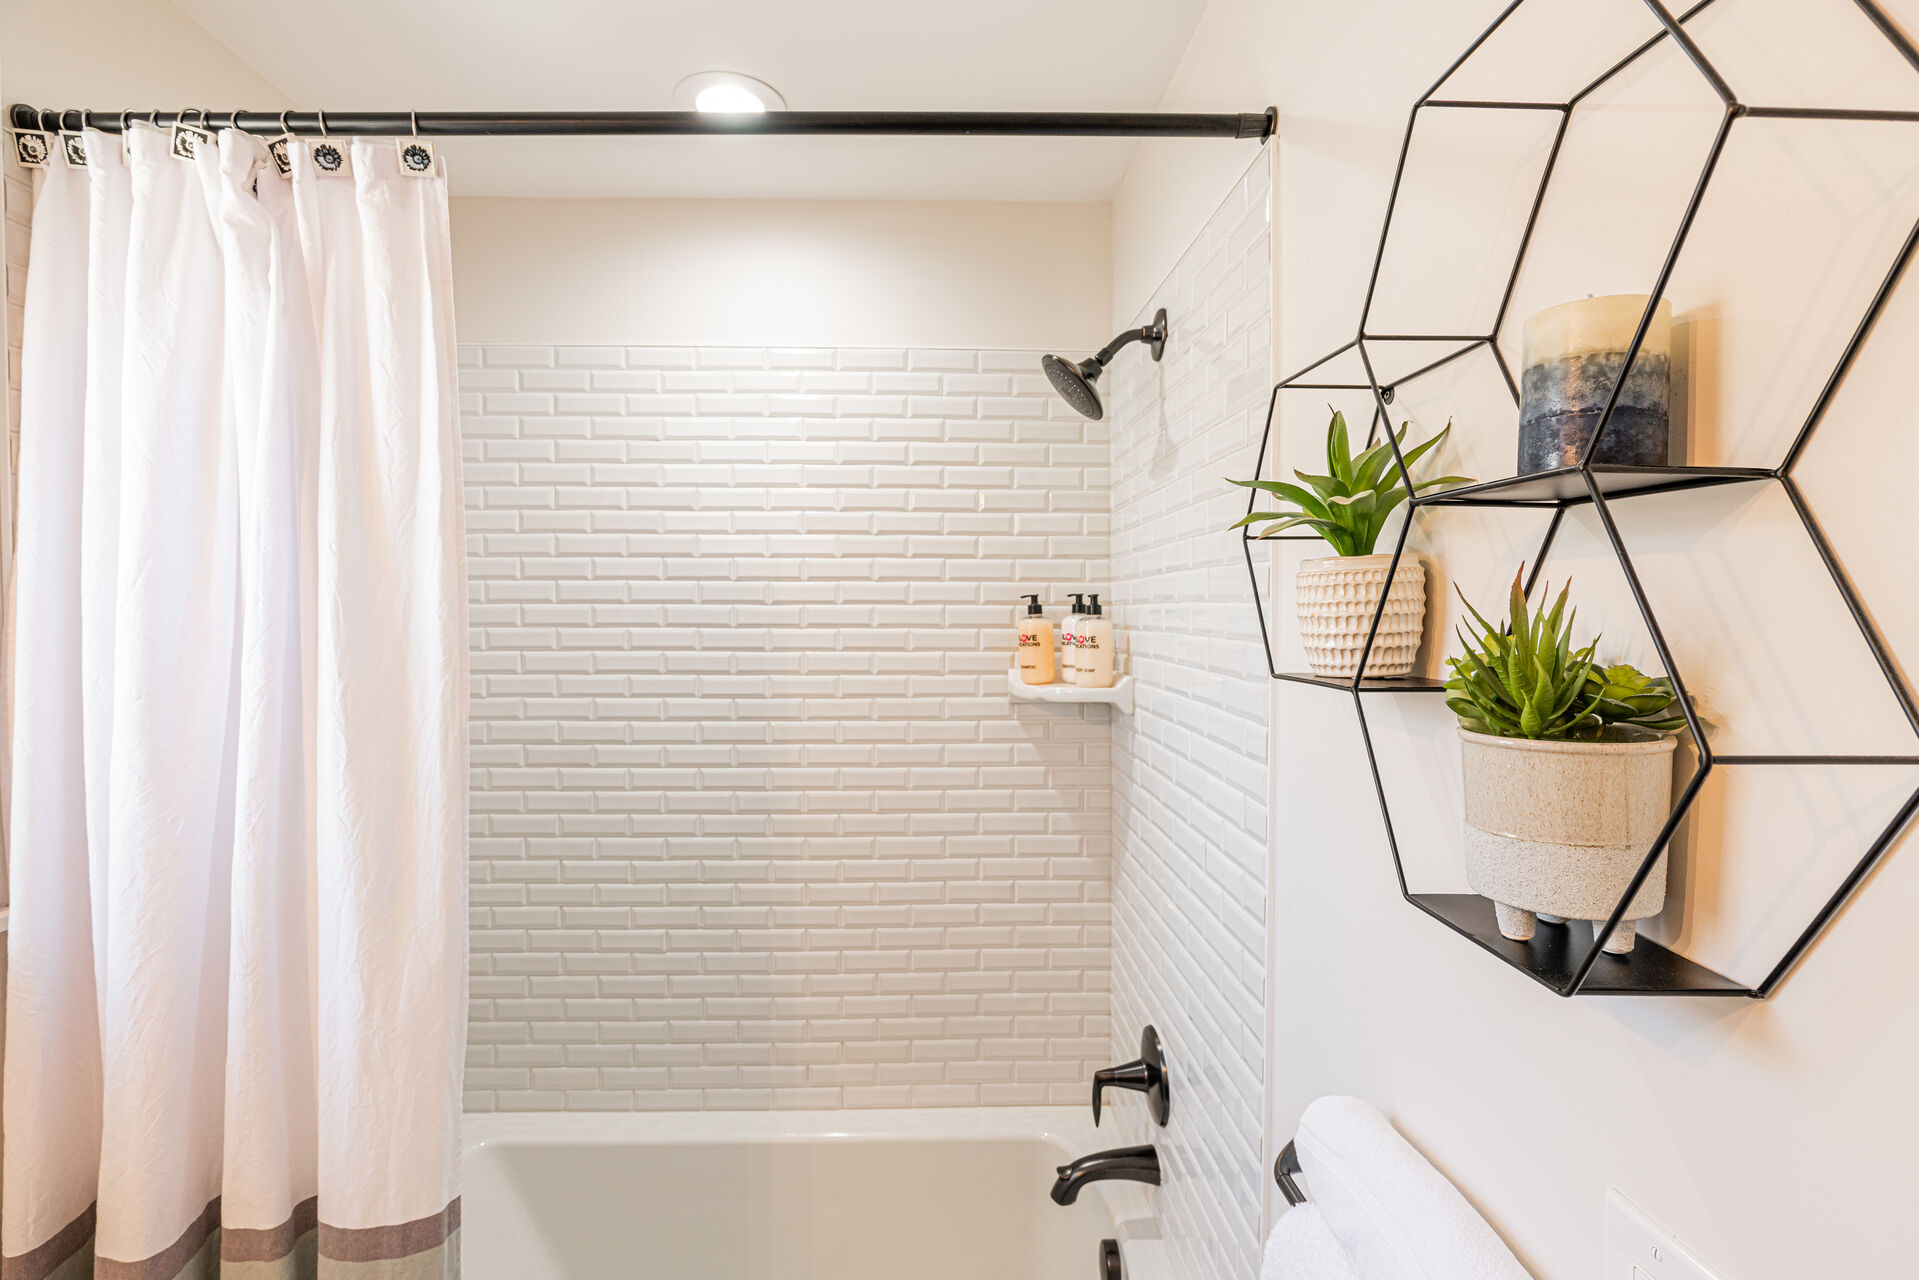 Tiled tub/shower combination